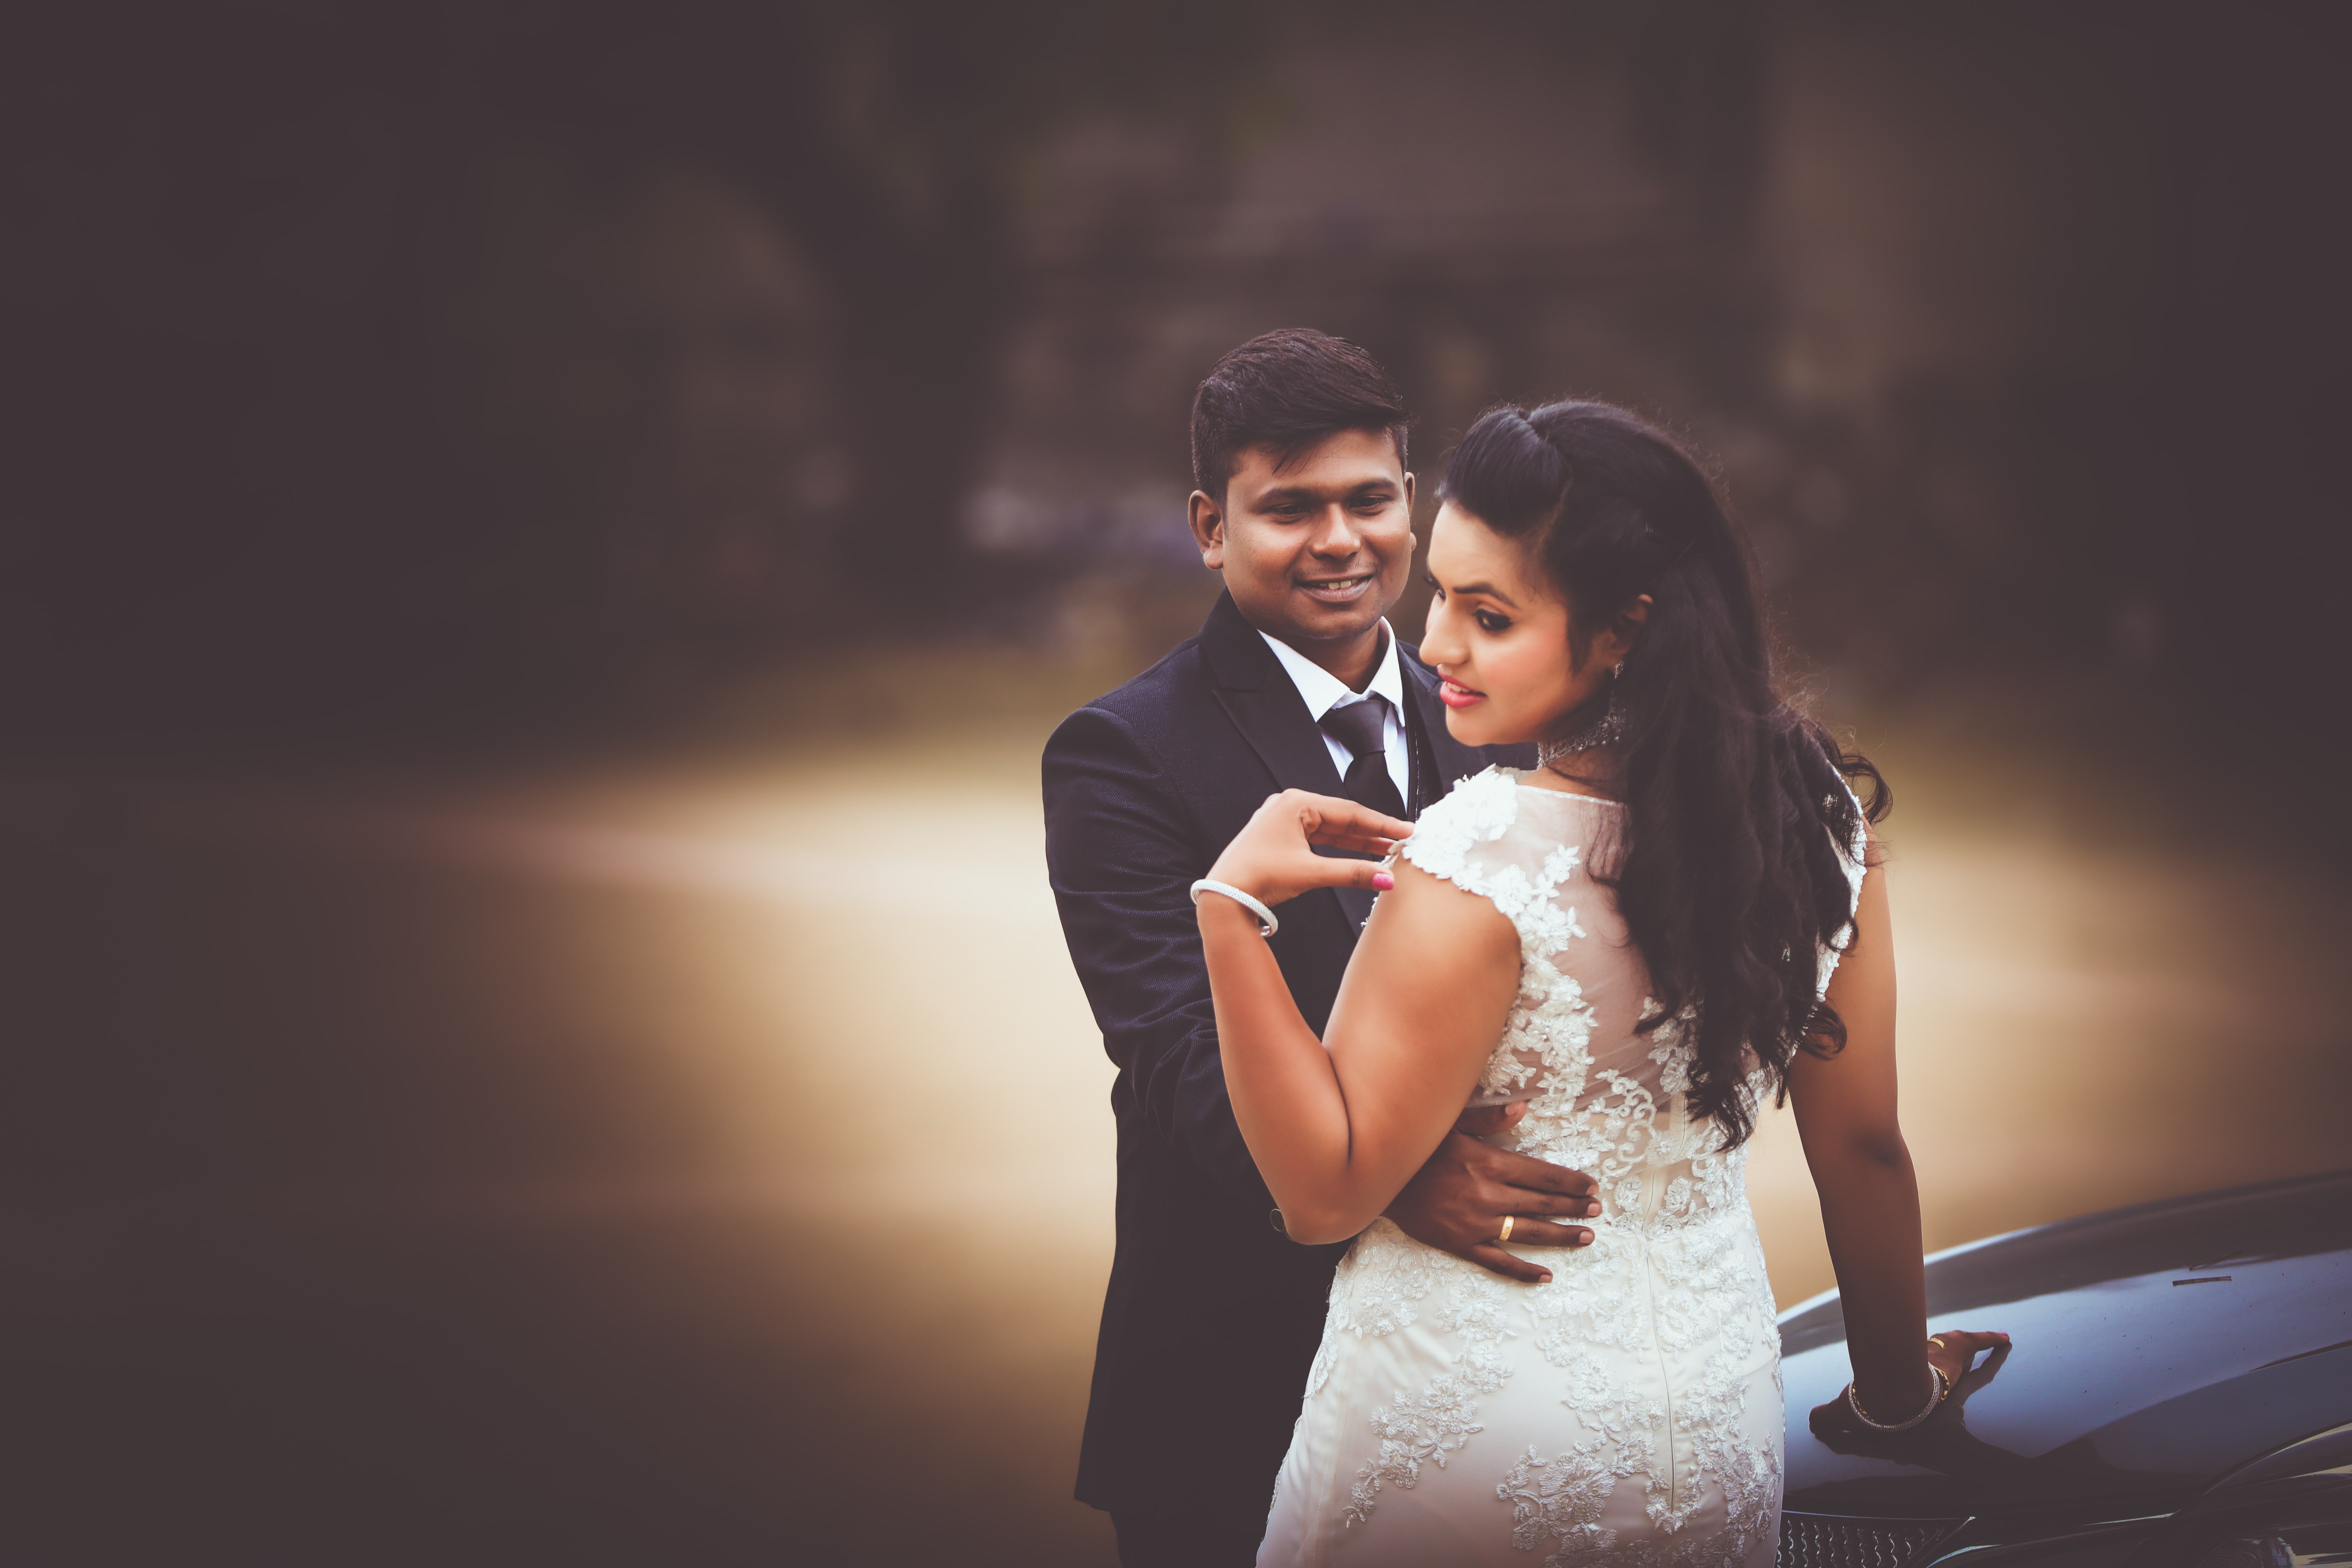 Top wedding  photographers in Tamilnadu.Celebrate  your wedding with the  best photographers in Trichy.